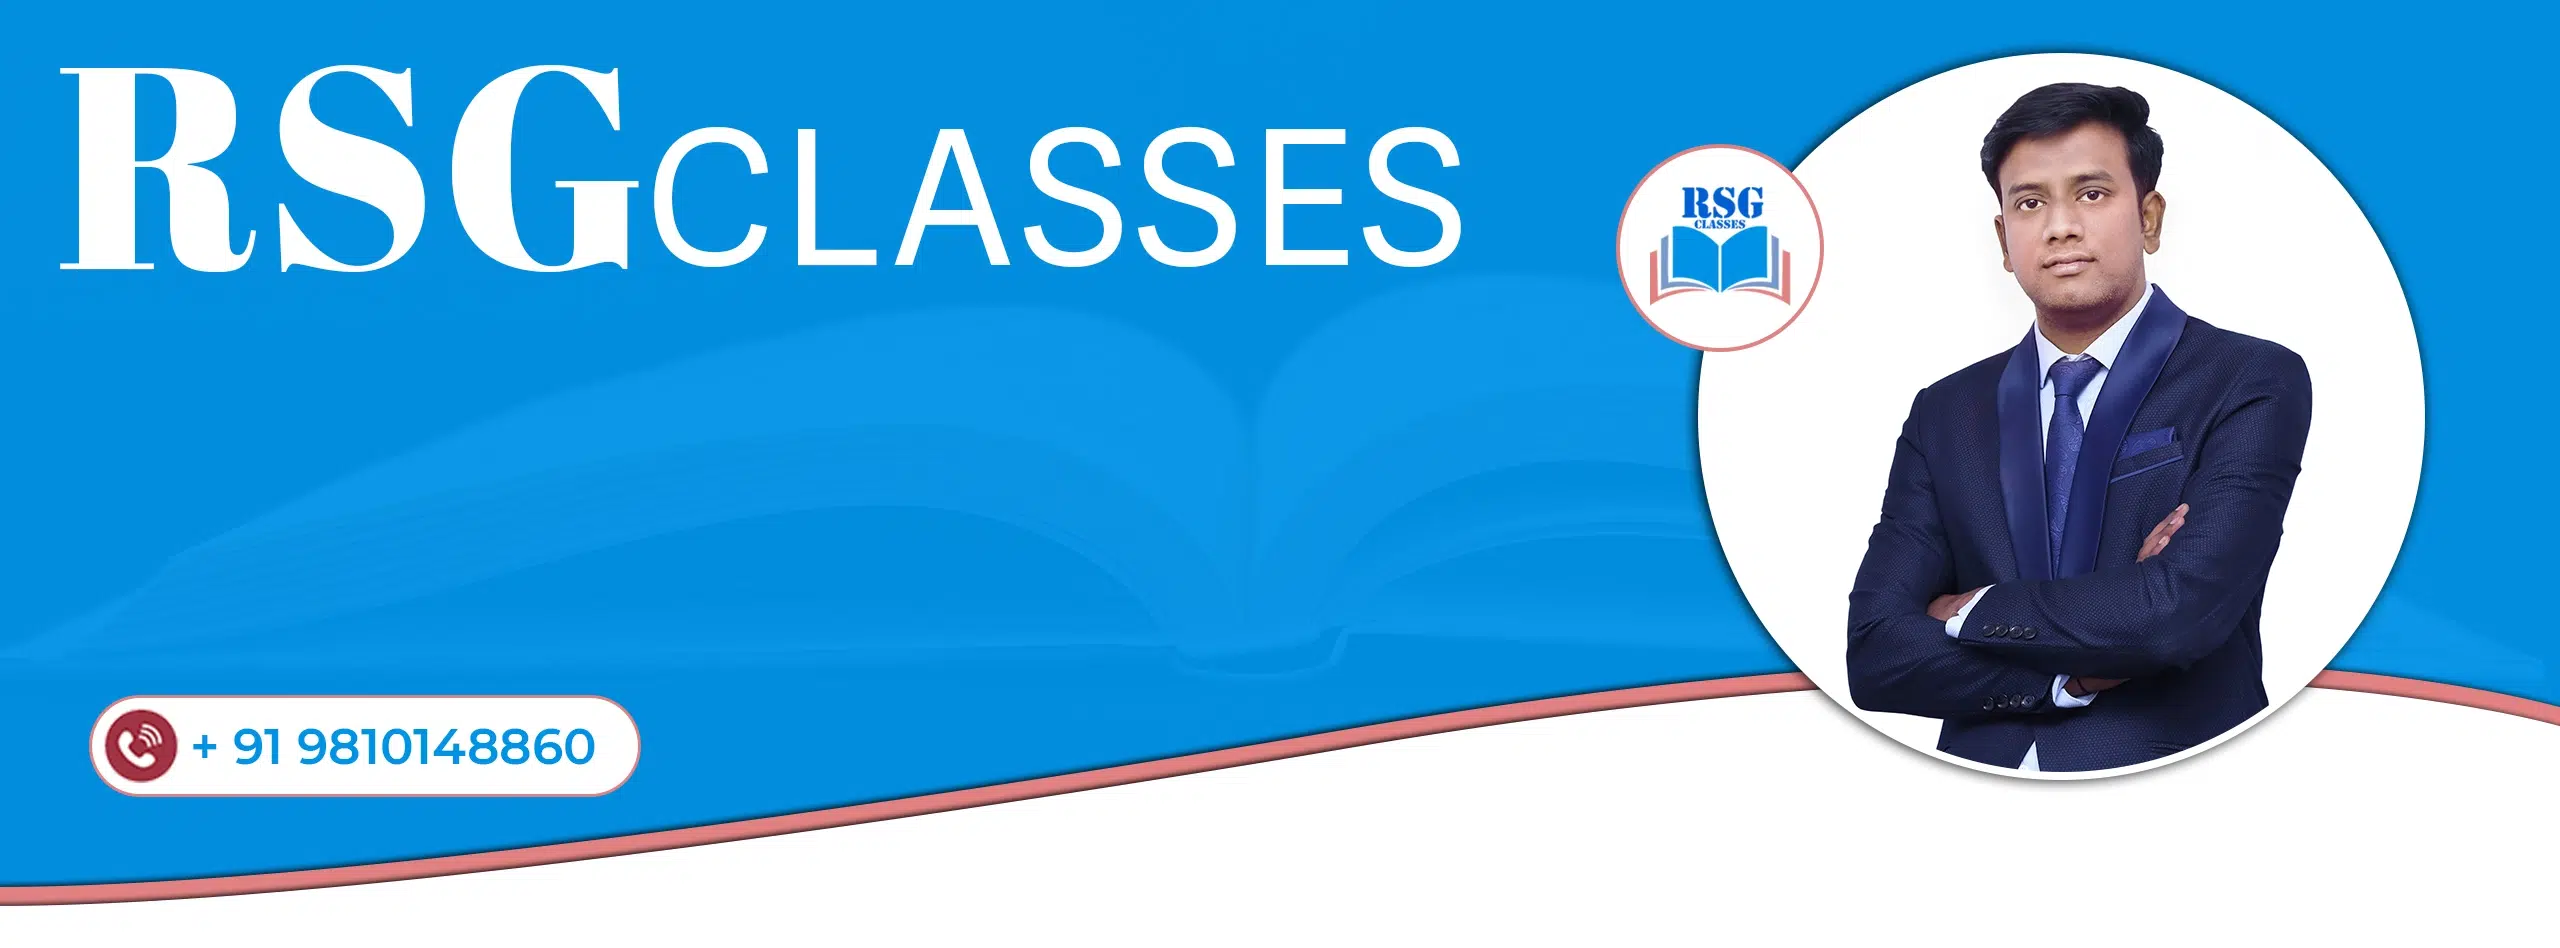 rsg Classes banner - 1